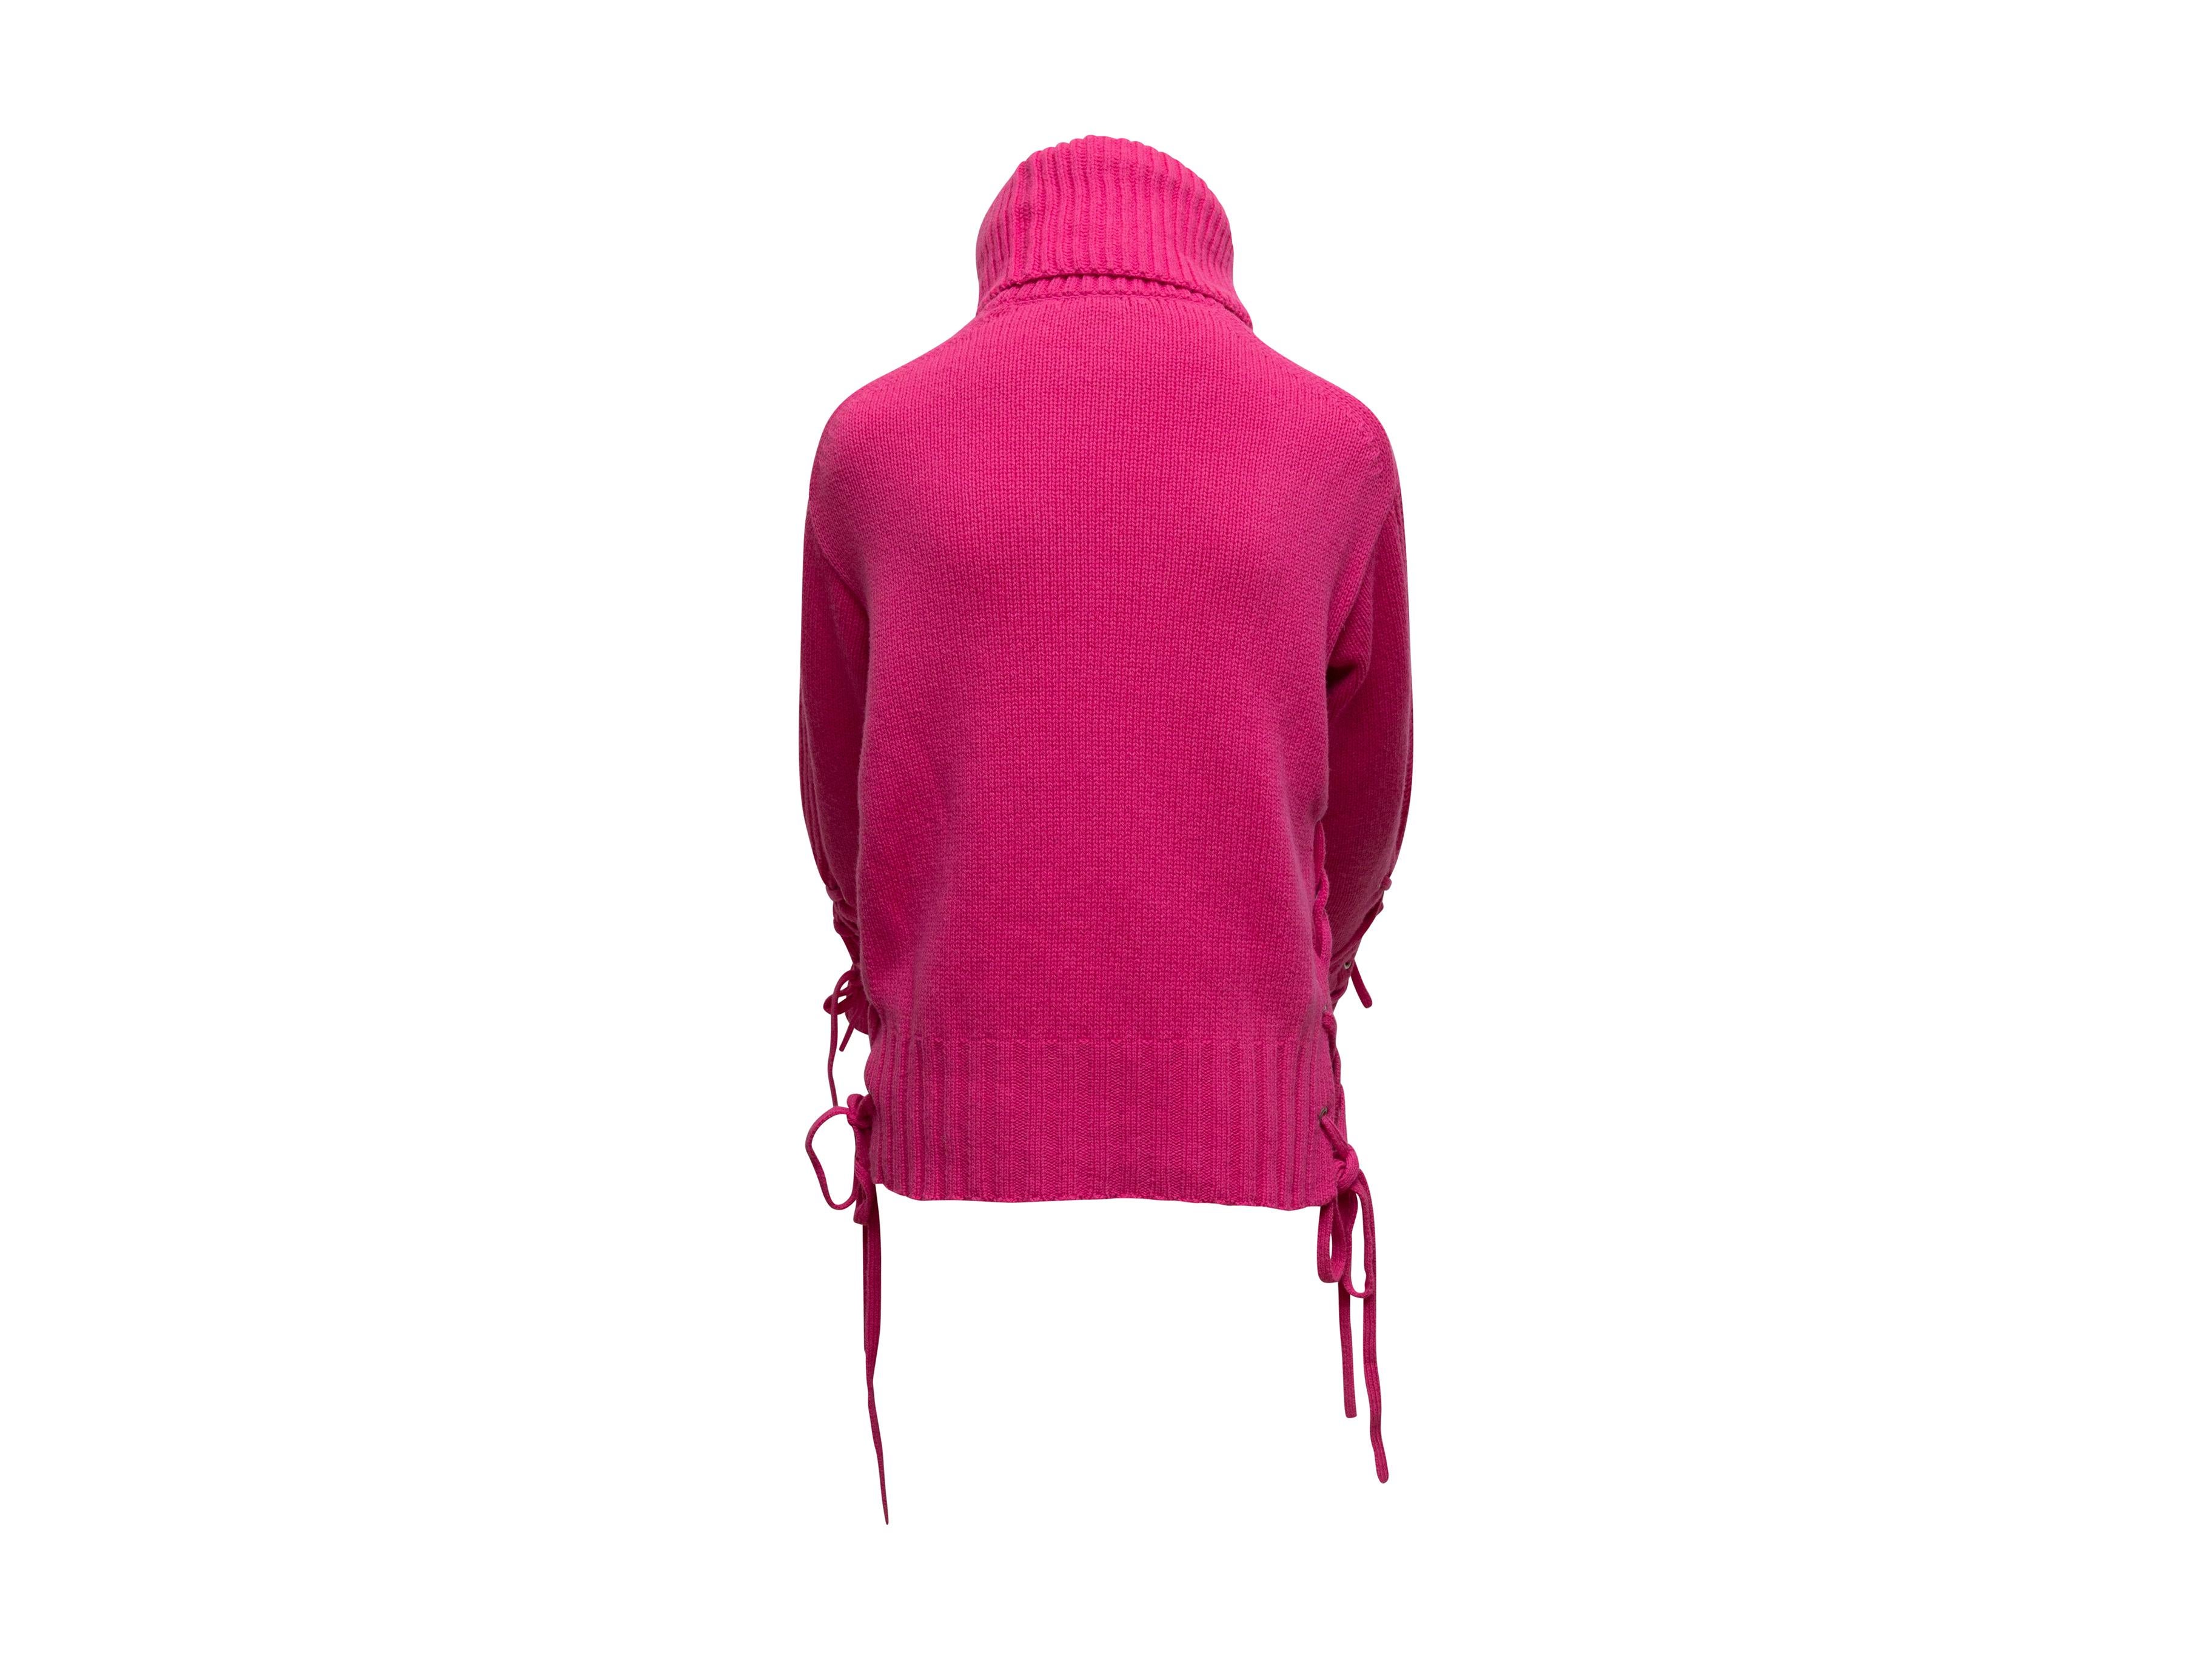 Women's McQ Alexander McQueen Hot Pink Turtleneck Sweater